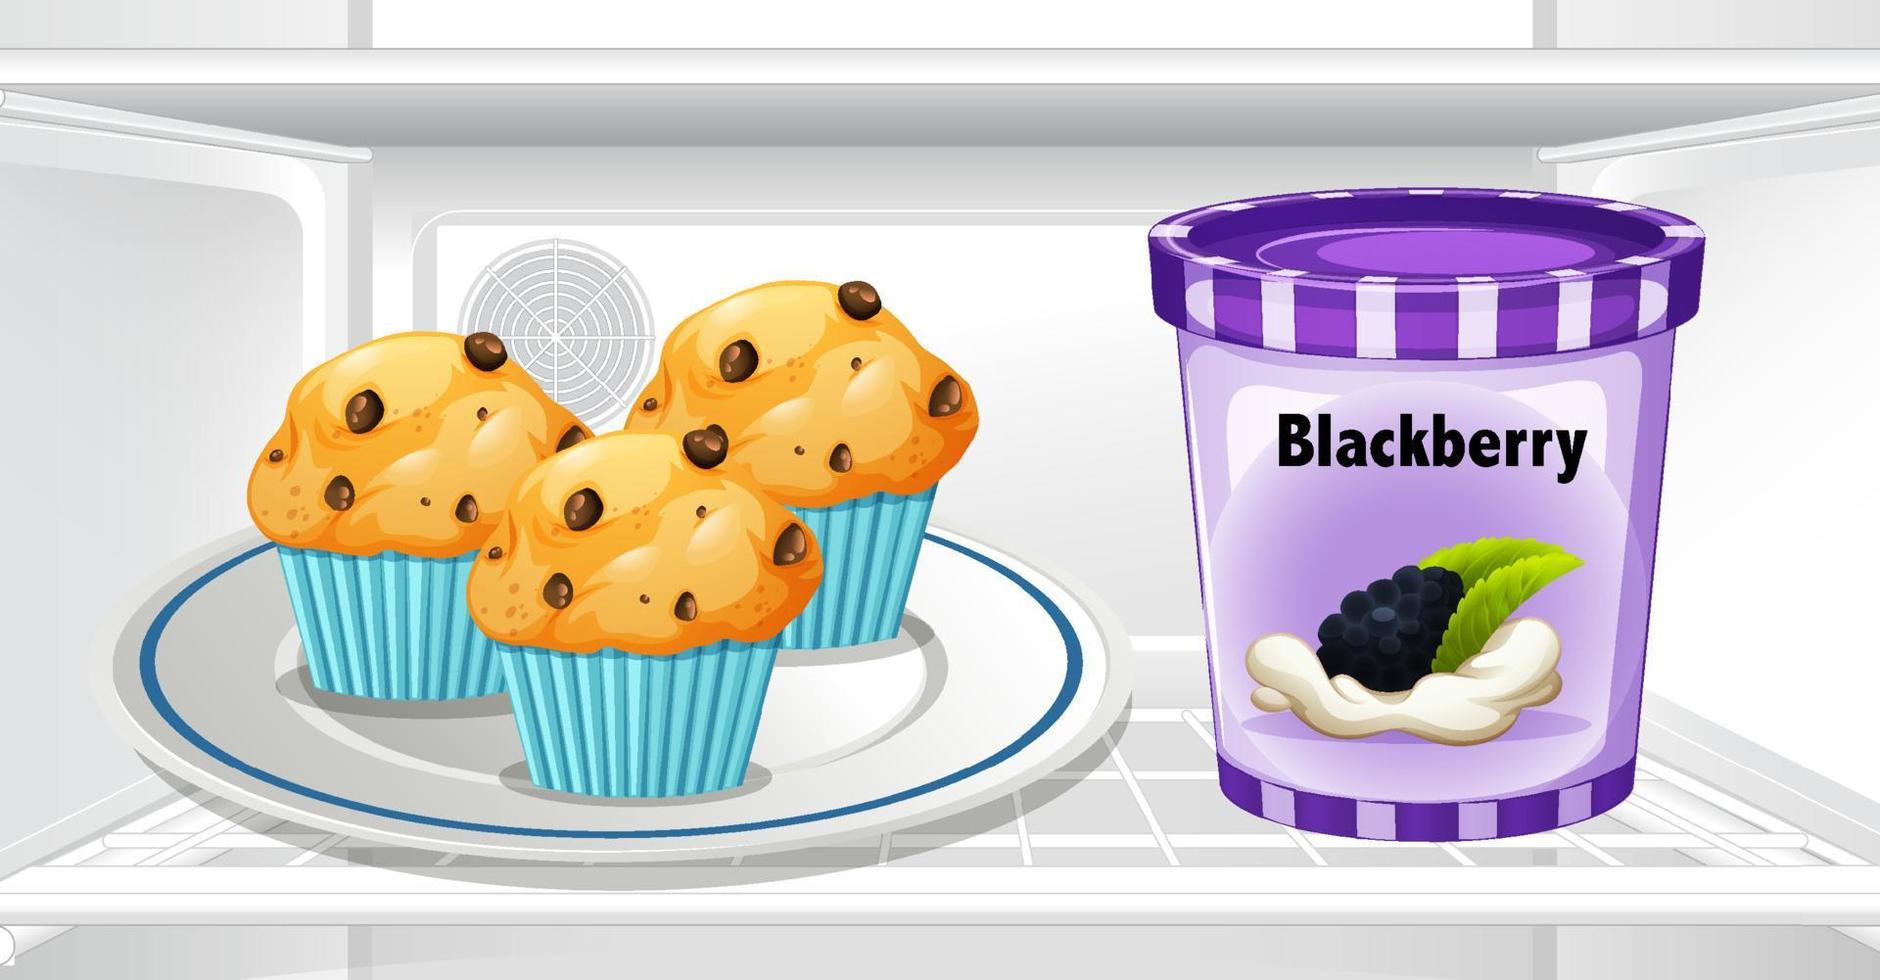 Muffins and blackberry yogurt in the fridge vector